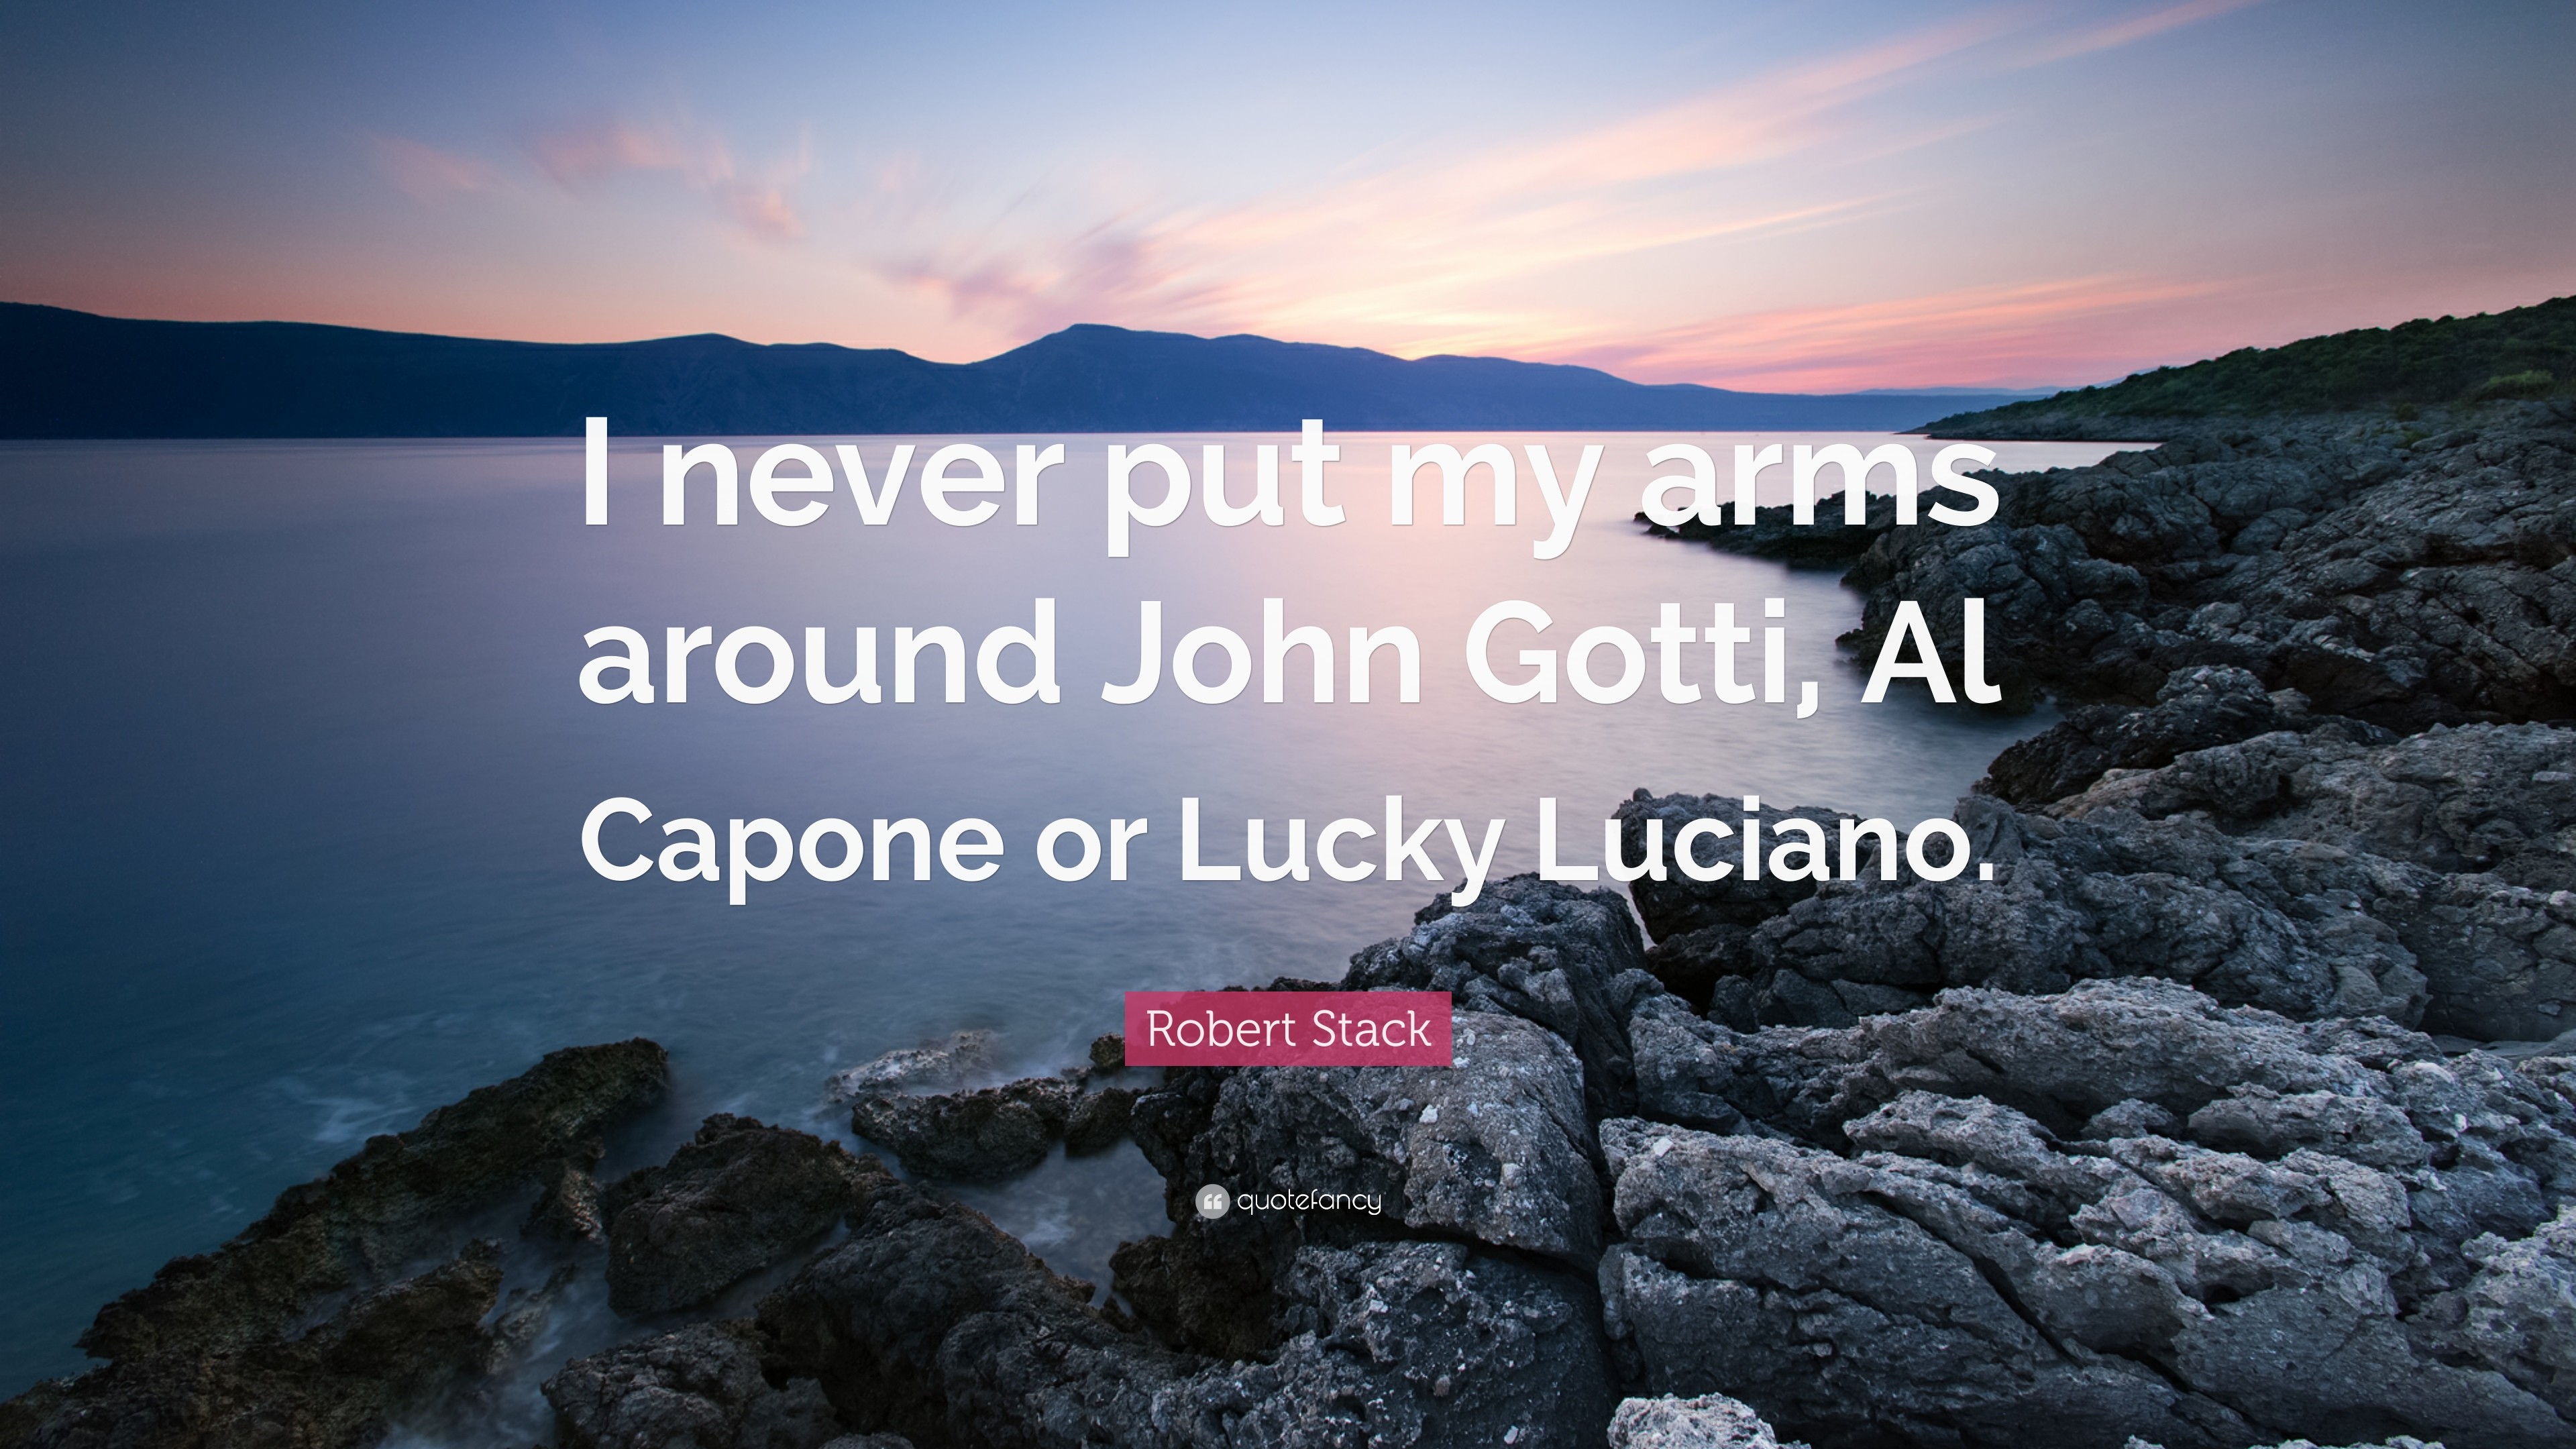 3840x2160 Robert Stack Quote: “I never put my arms around John Gotti, Al Capone